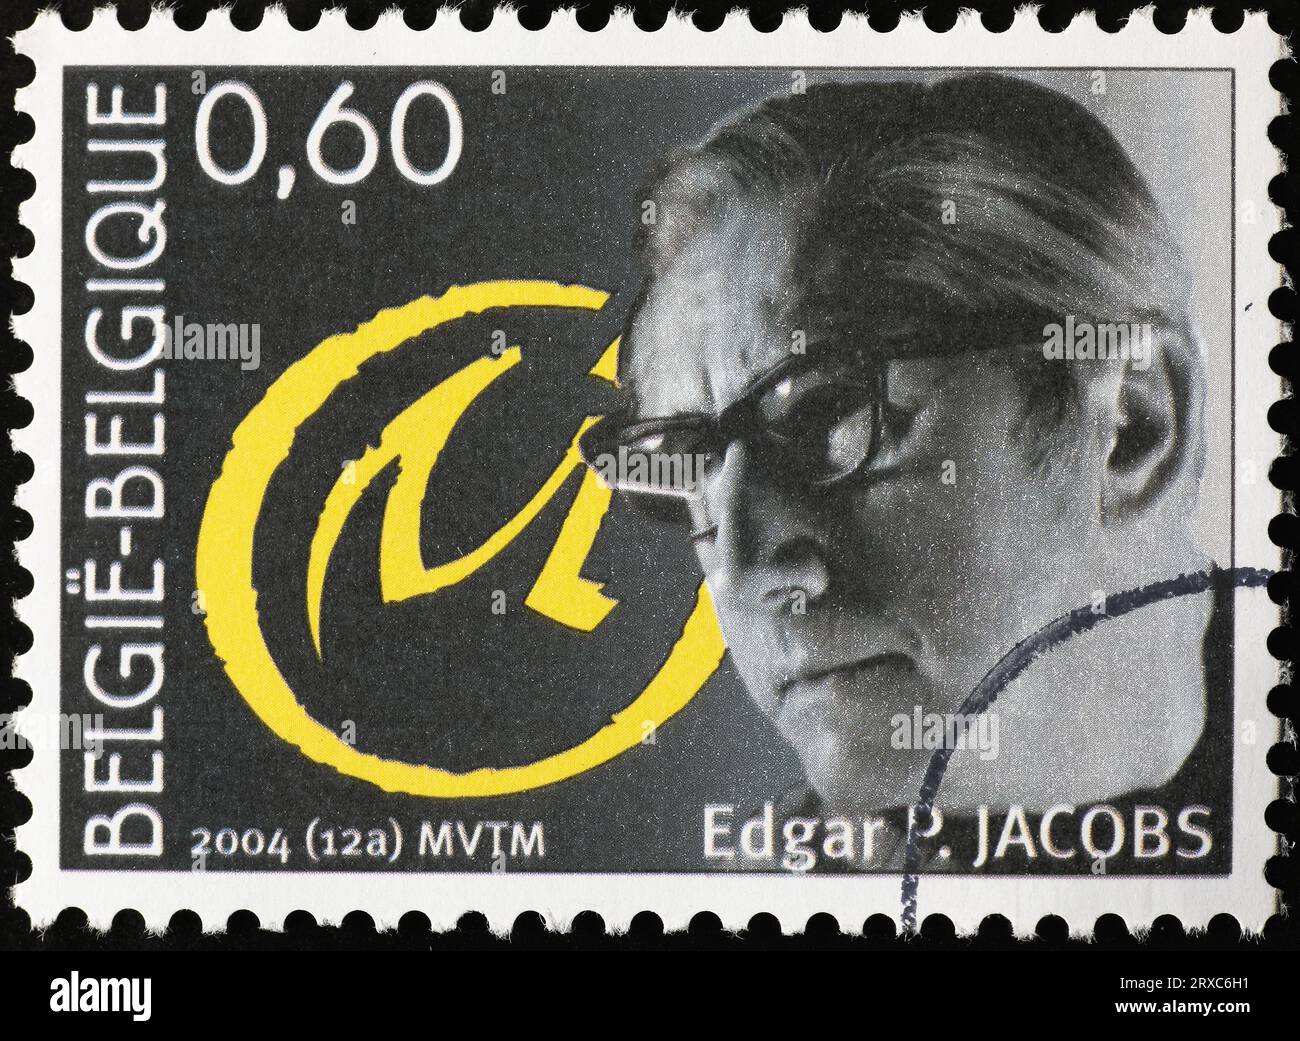 Comic book creator Edgar P.Jacobs on belgian stamp Stock Photo